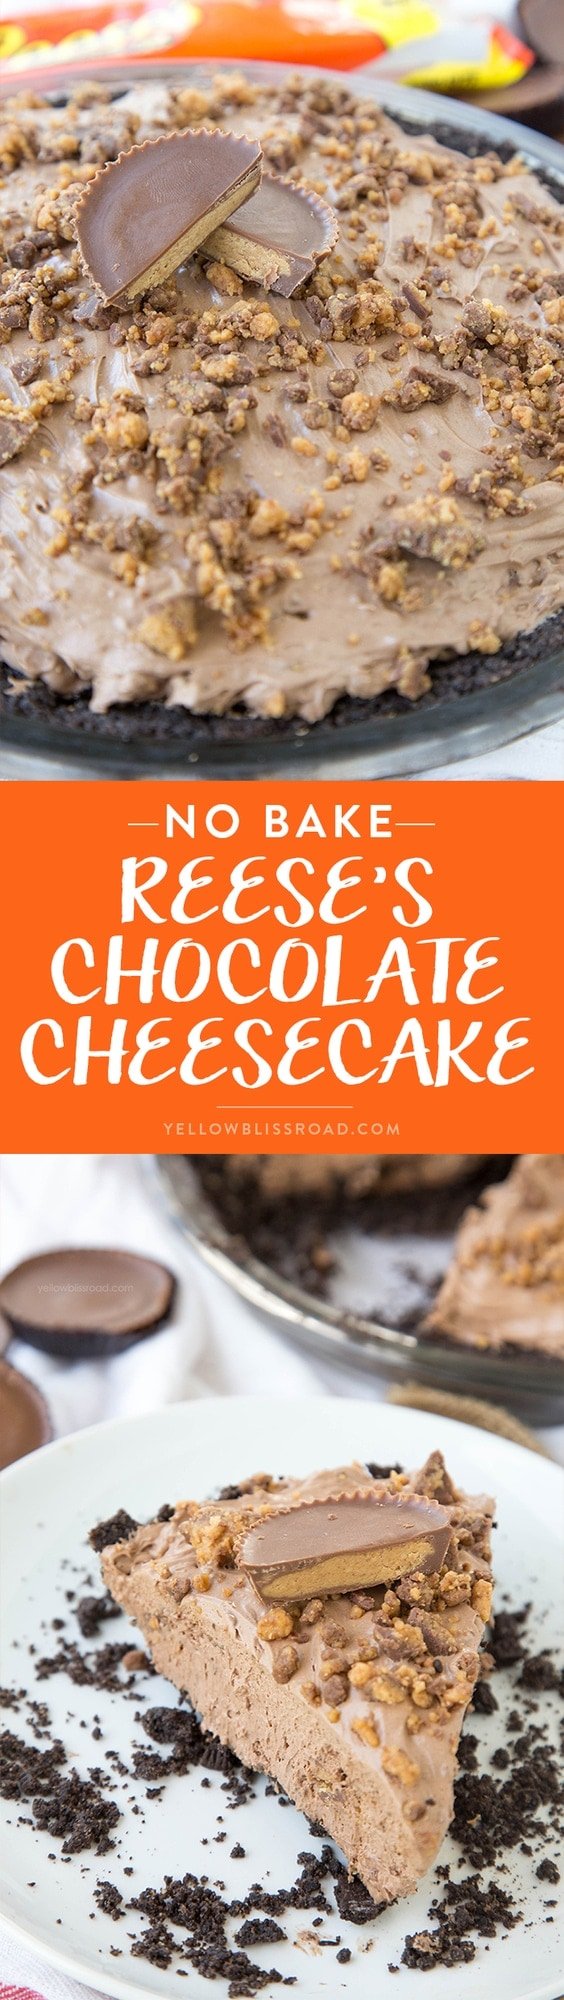 No Bake Reese's Chocolate Cheesecake